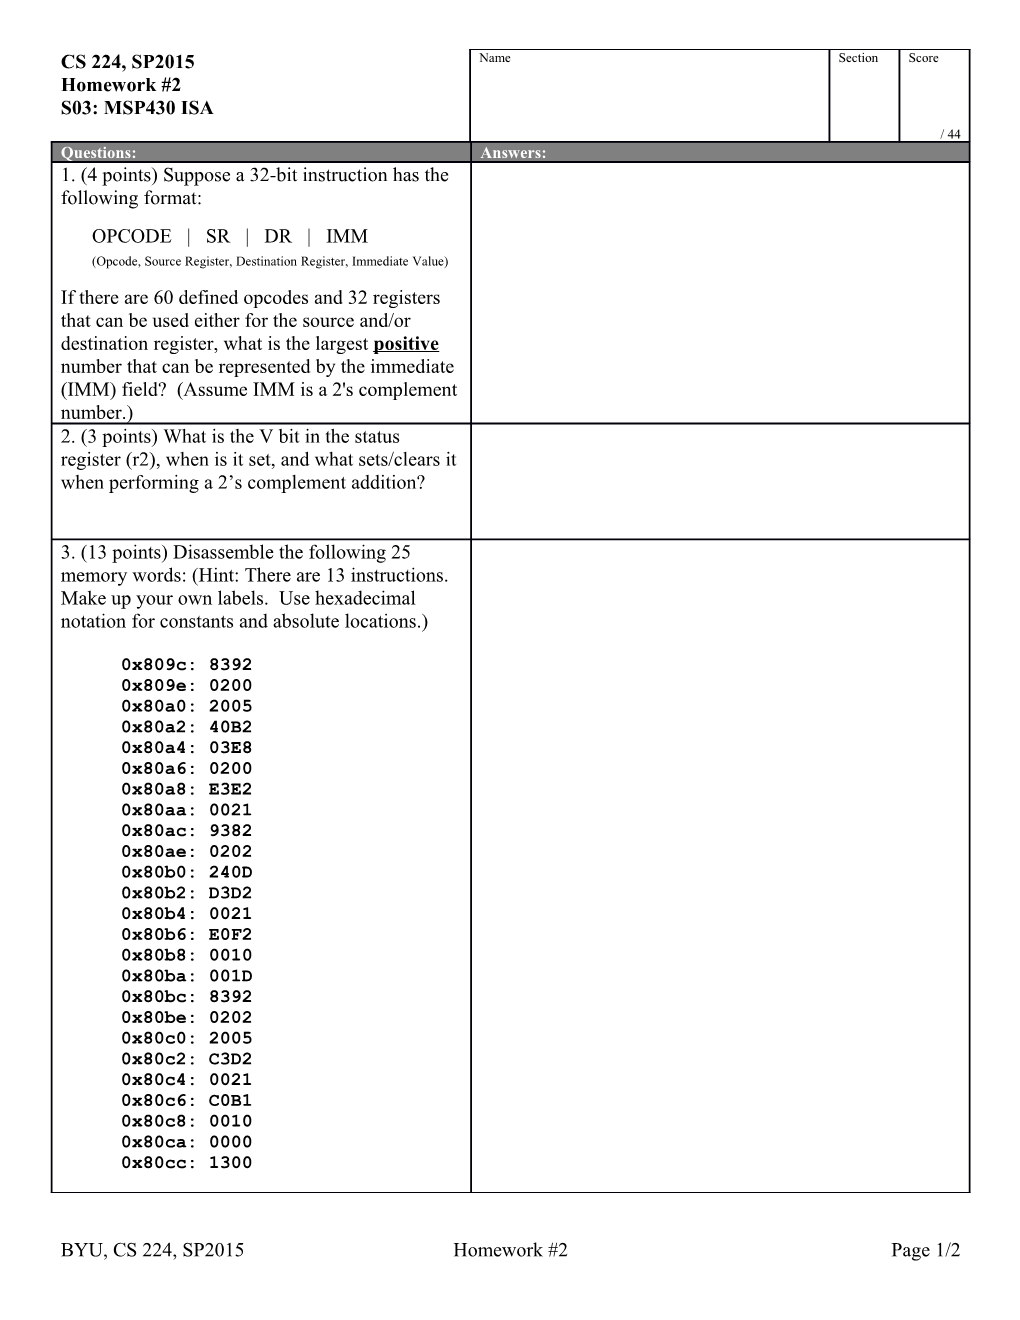 BYU, CS 224, SP2015 Homework #2 Page 1/2